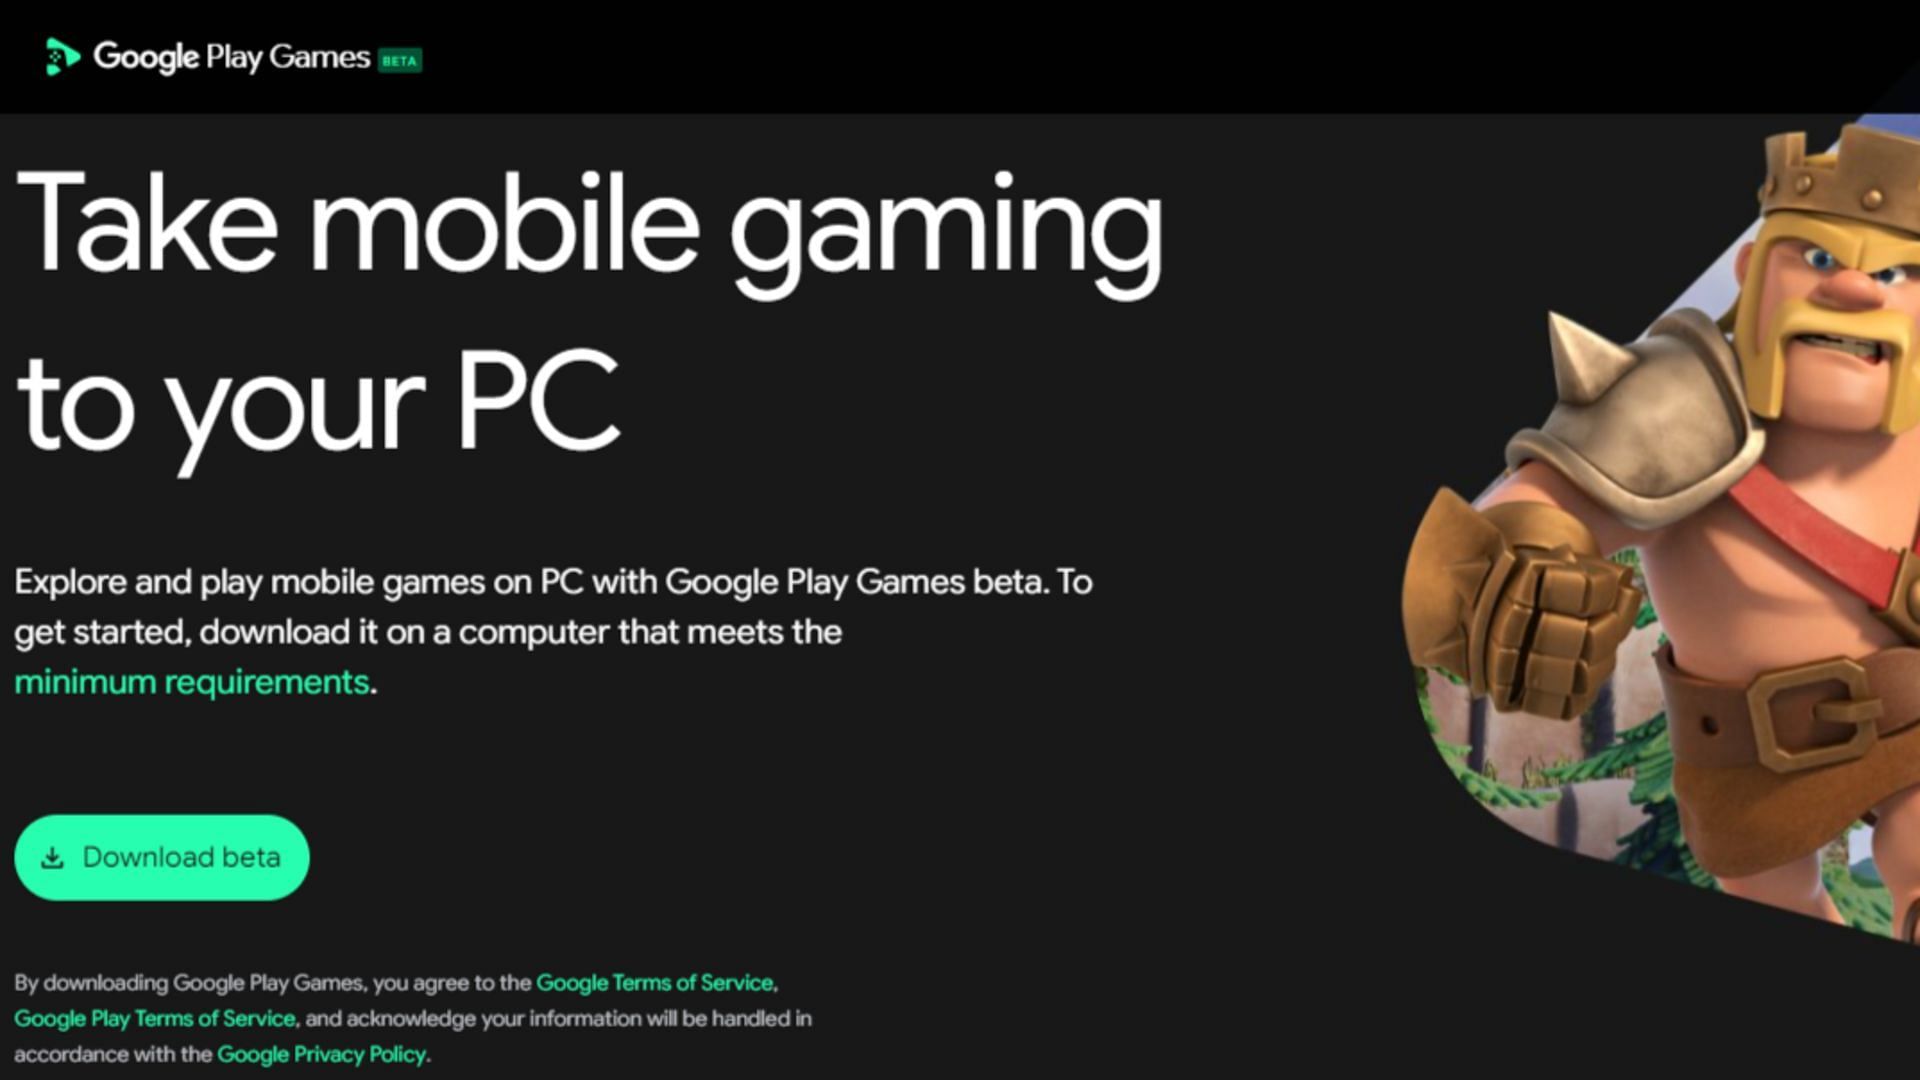 Google Play Games beta download page (Image via Google)